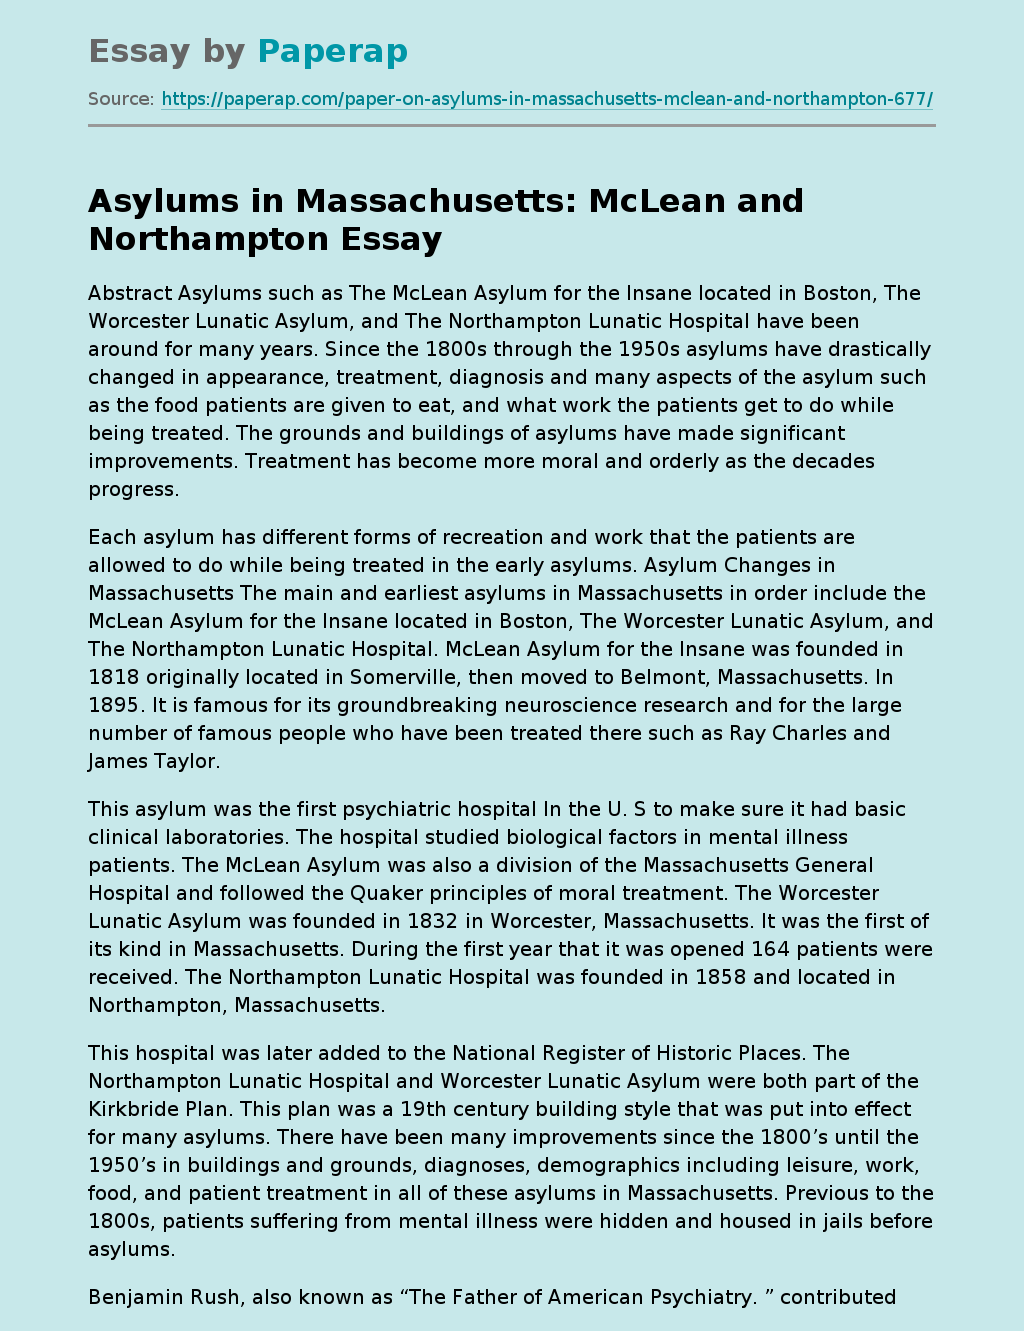 Asylums in Massachusetts: McLean and Northampton